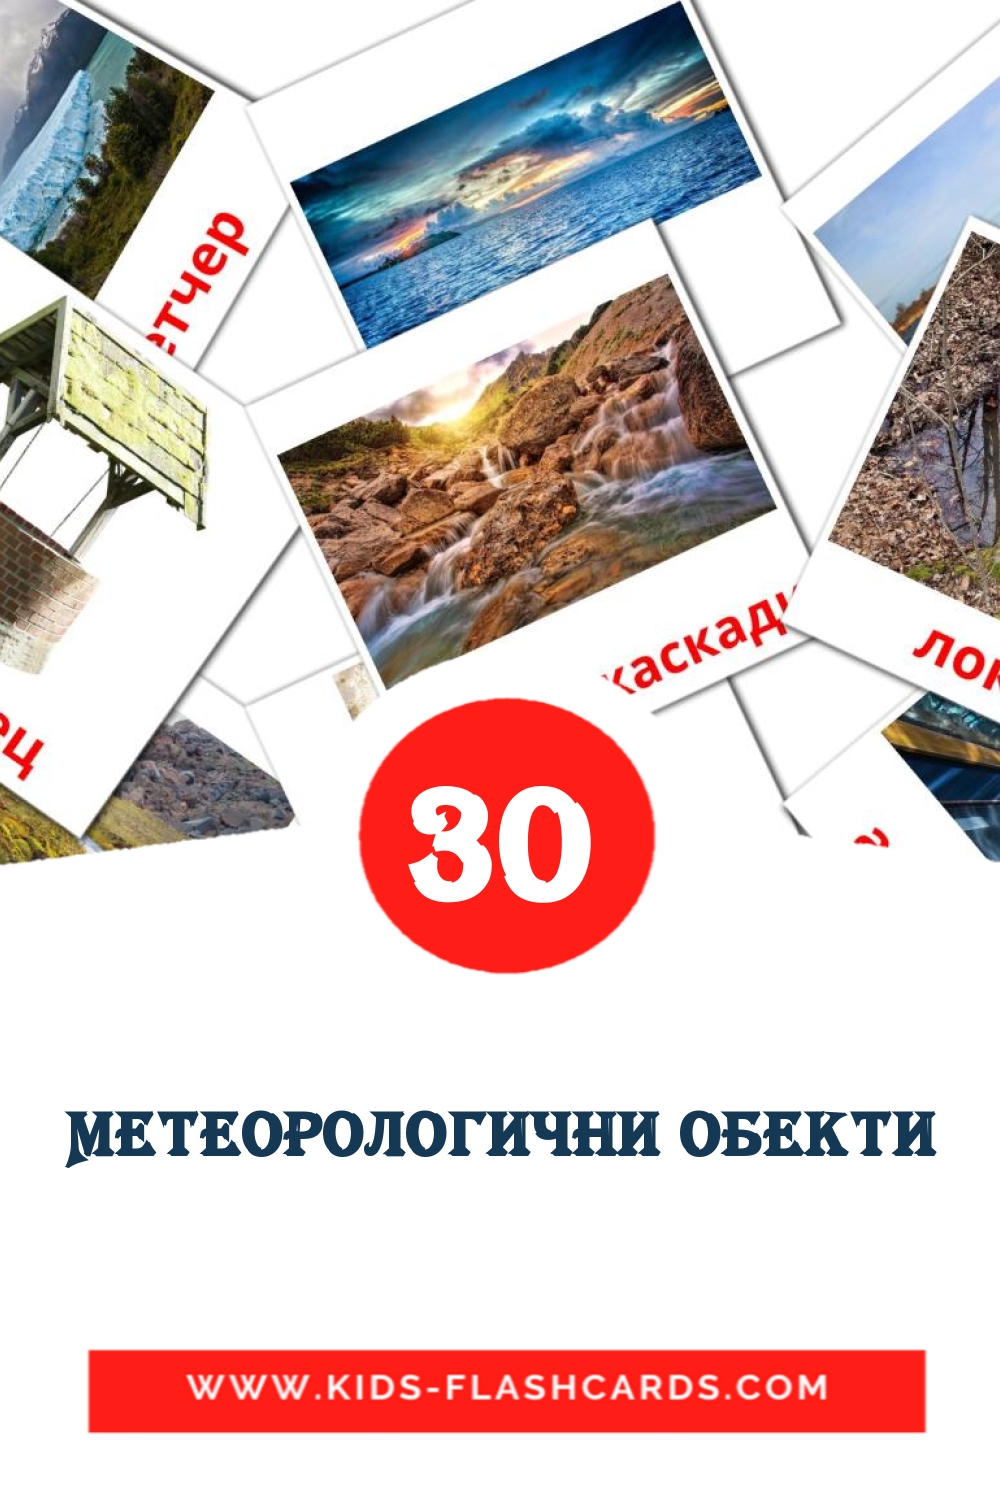 30 Метеорологични обекти Picture Cards for Kindergarden in bulgarian